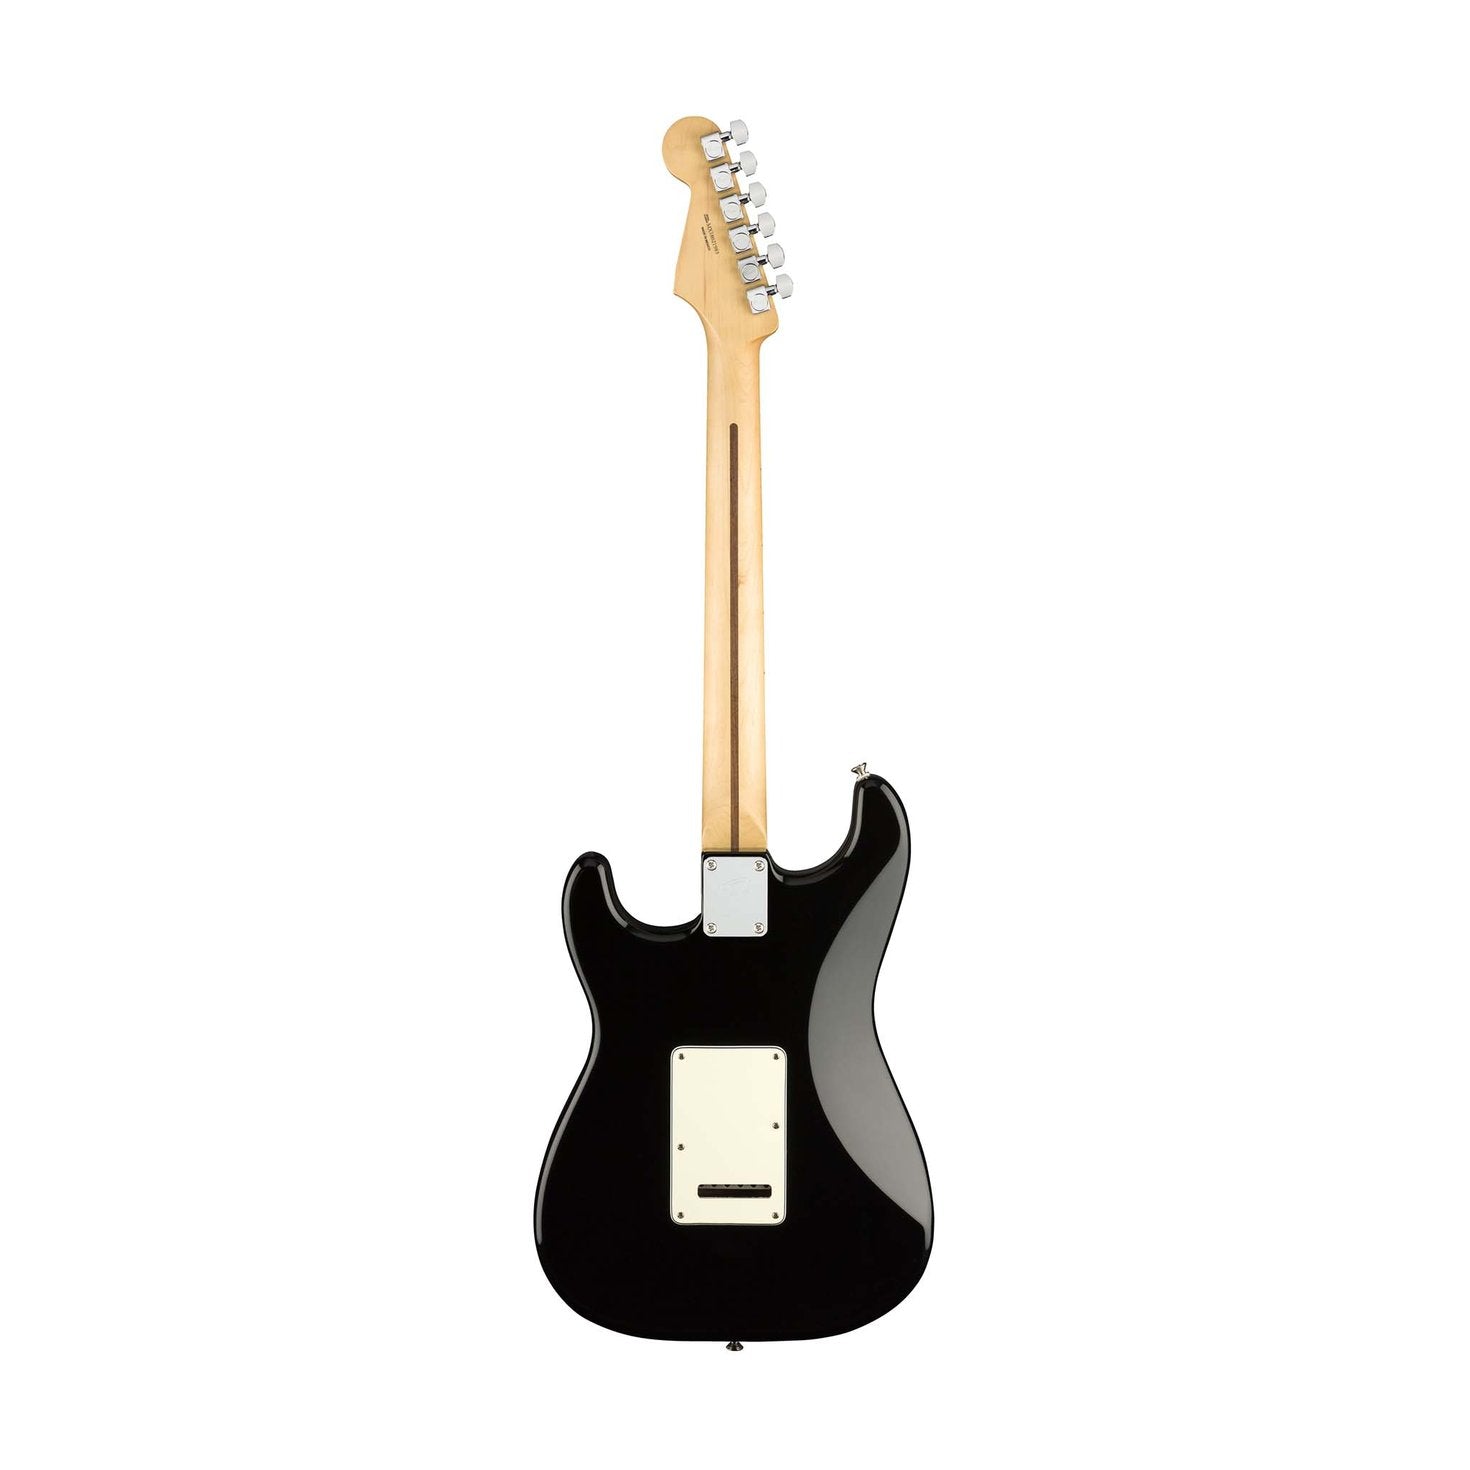 Fender Player HSS Stratocaster Electric Guitar, Maple FB, Black, FENDER, ELECTRIC GUITAR, fender-eletric-guitar-f03-014-4522-506, ZOSO MUSIC SDN BHD